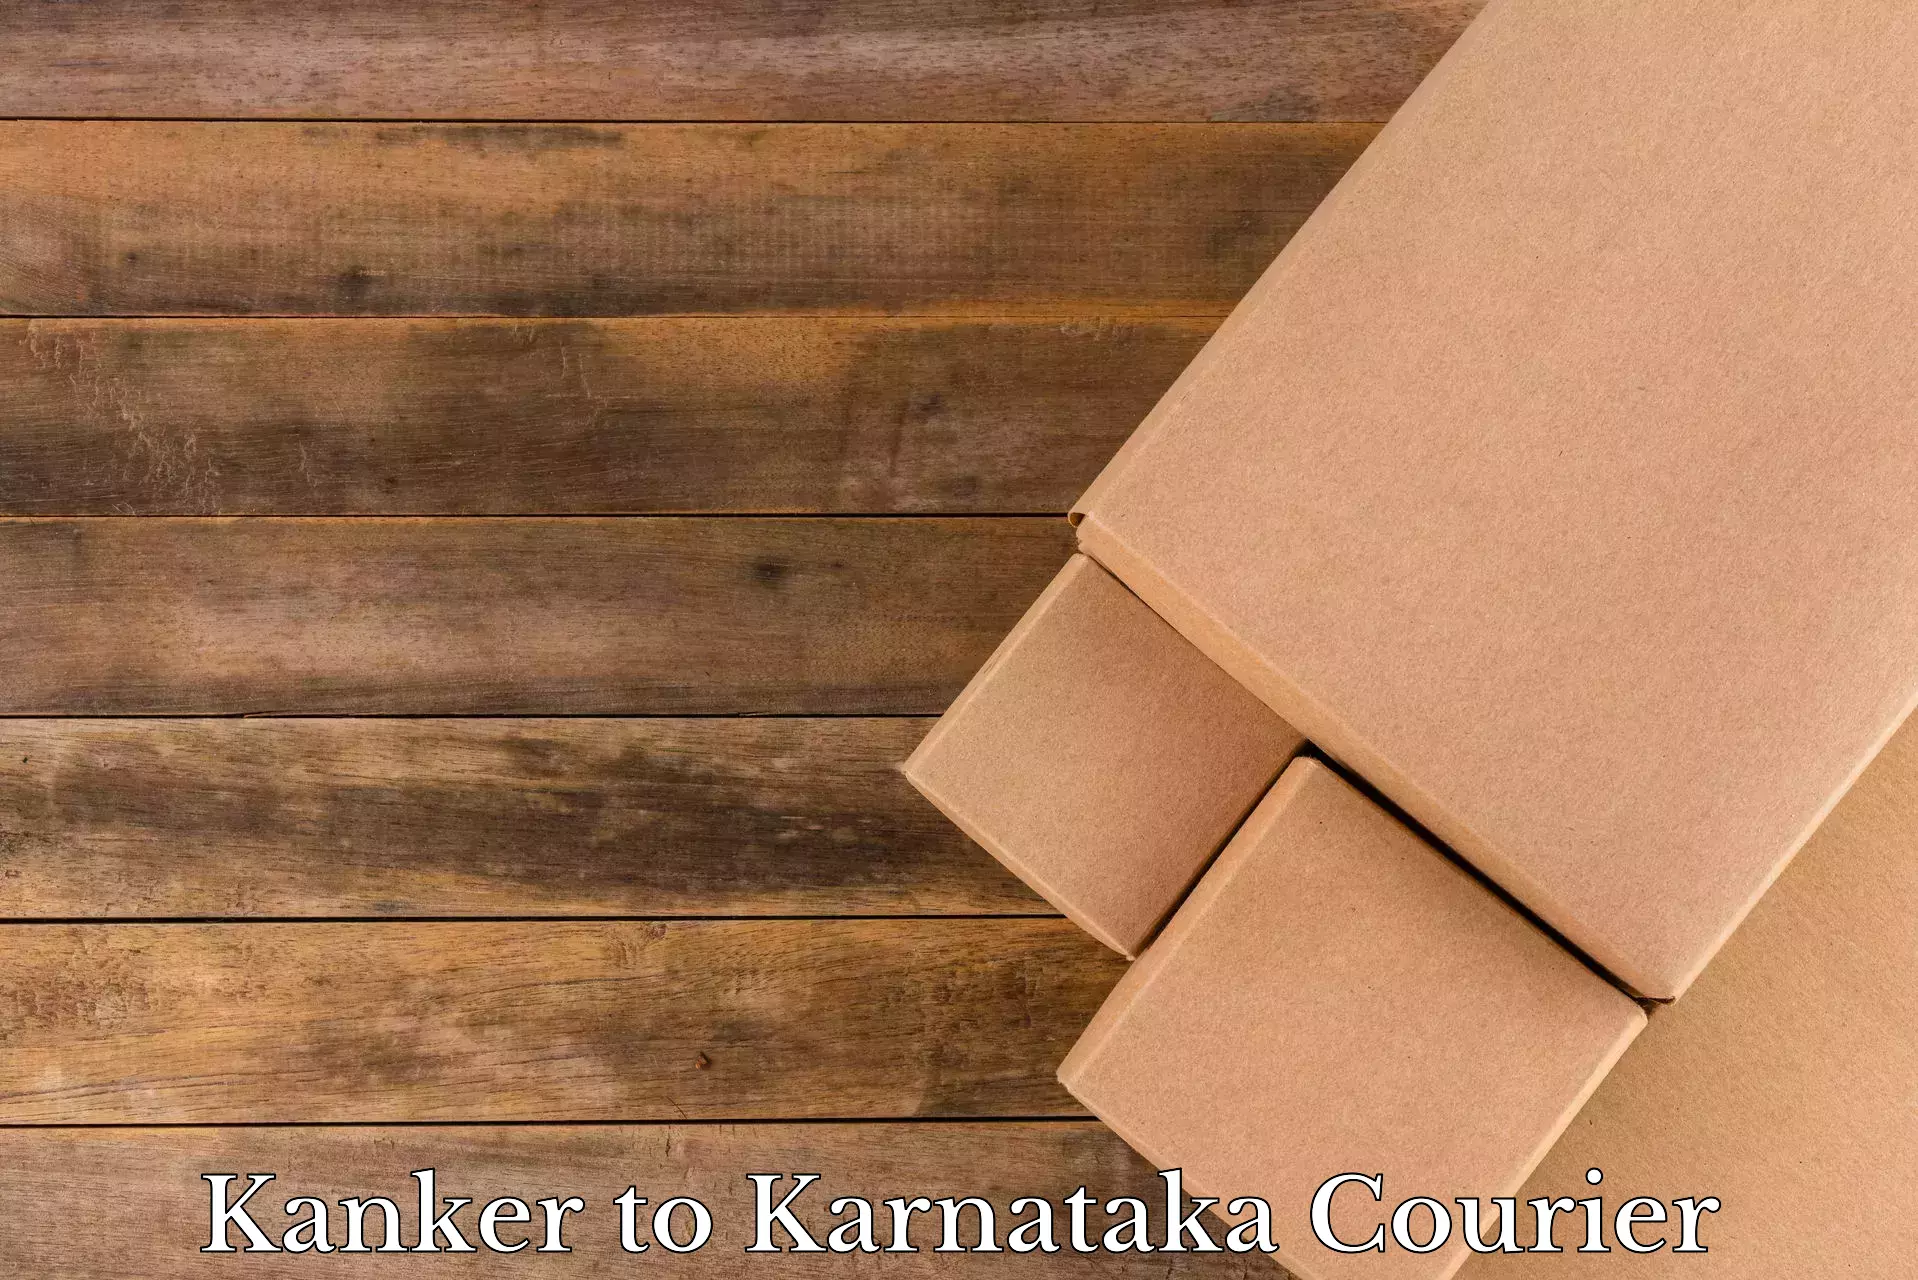 Professional packing services in Kanker to Karnataka